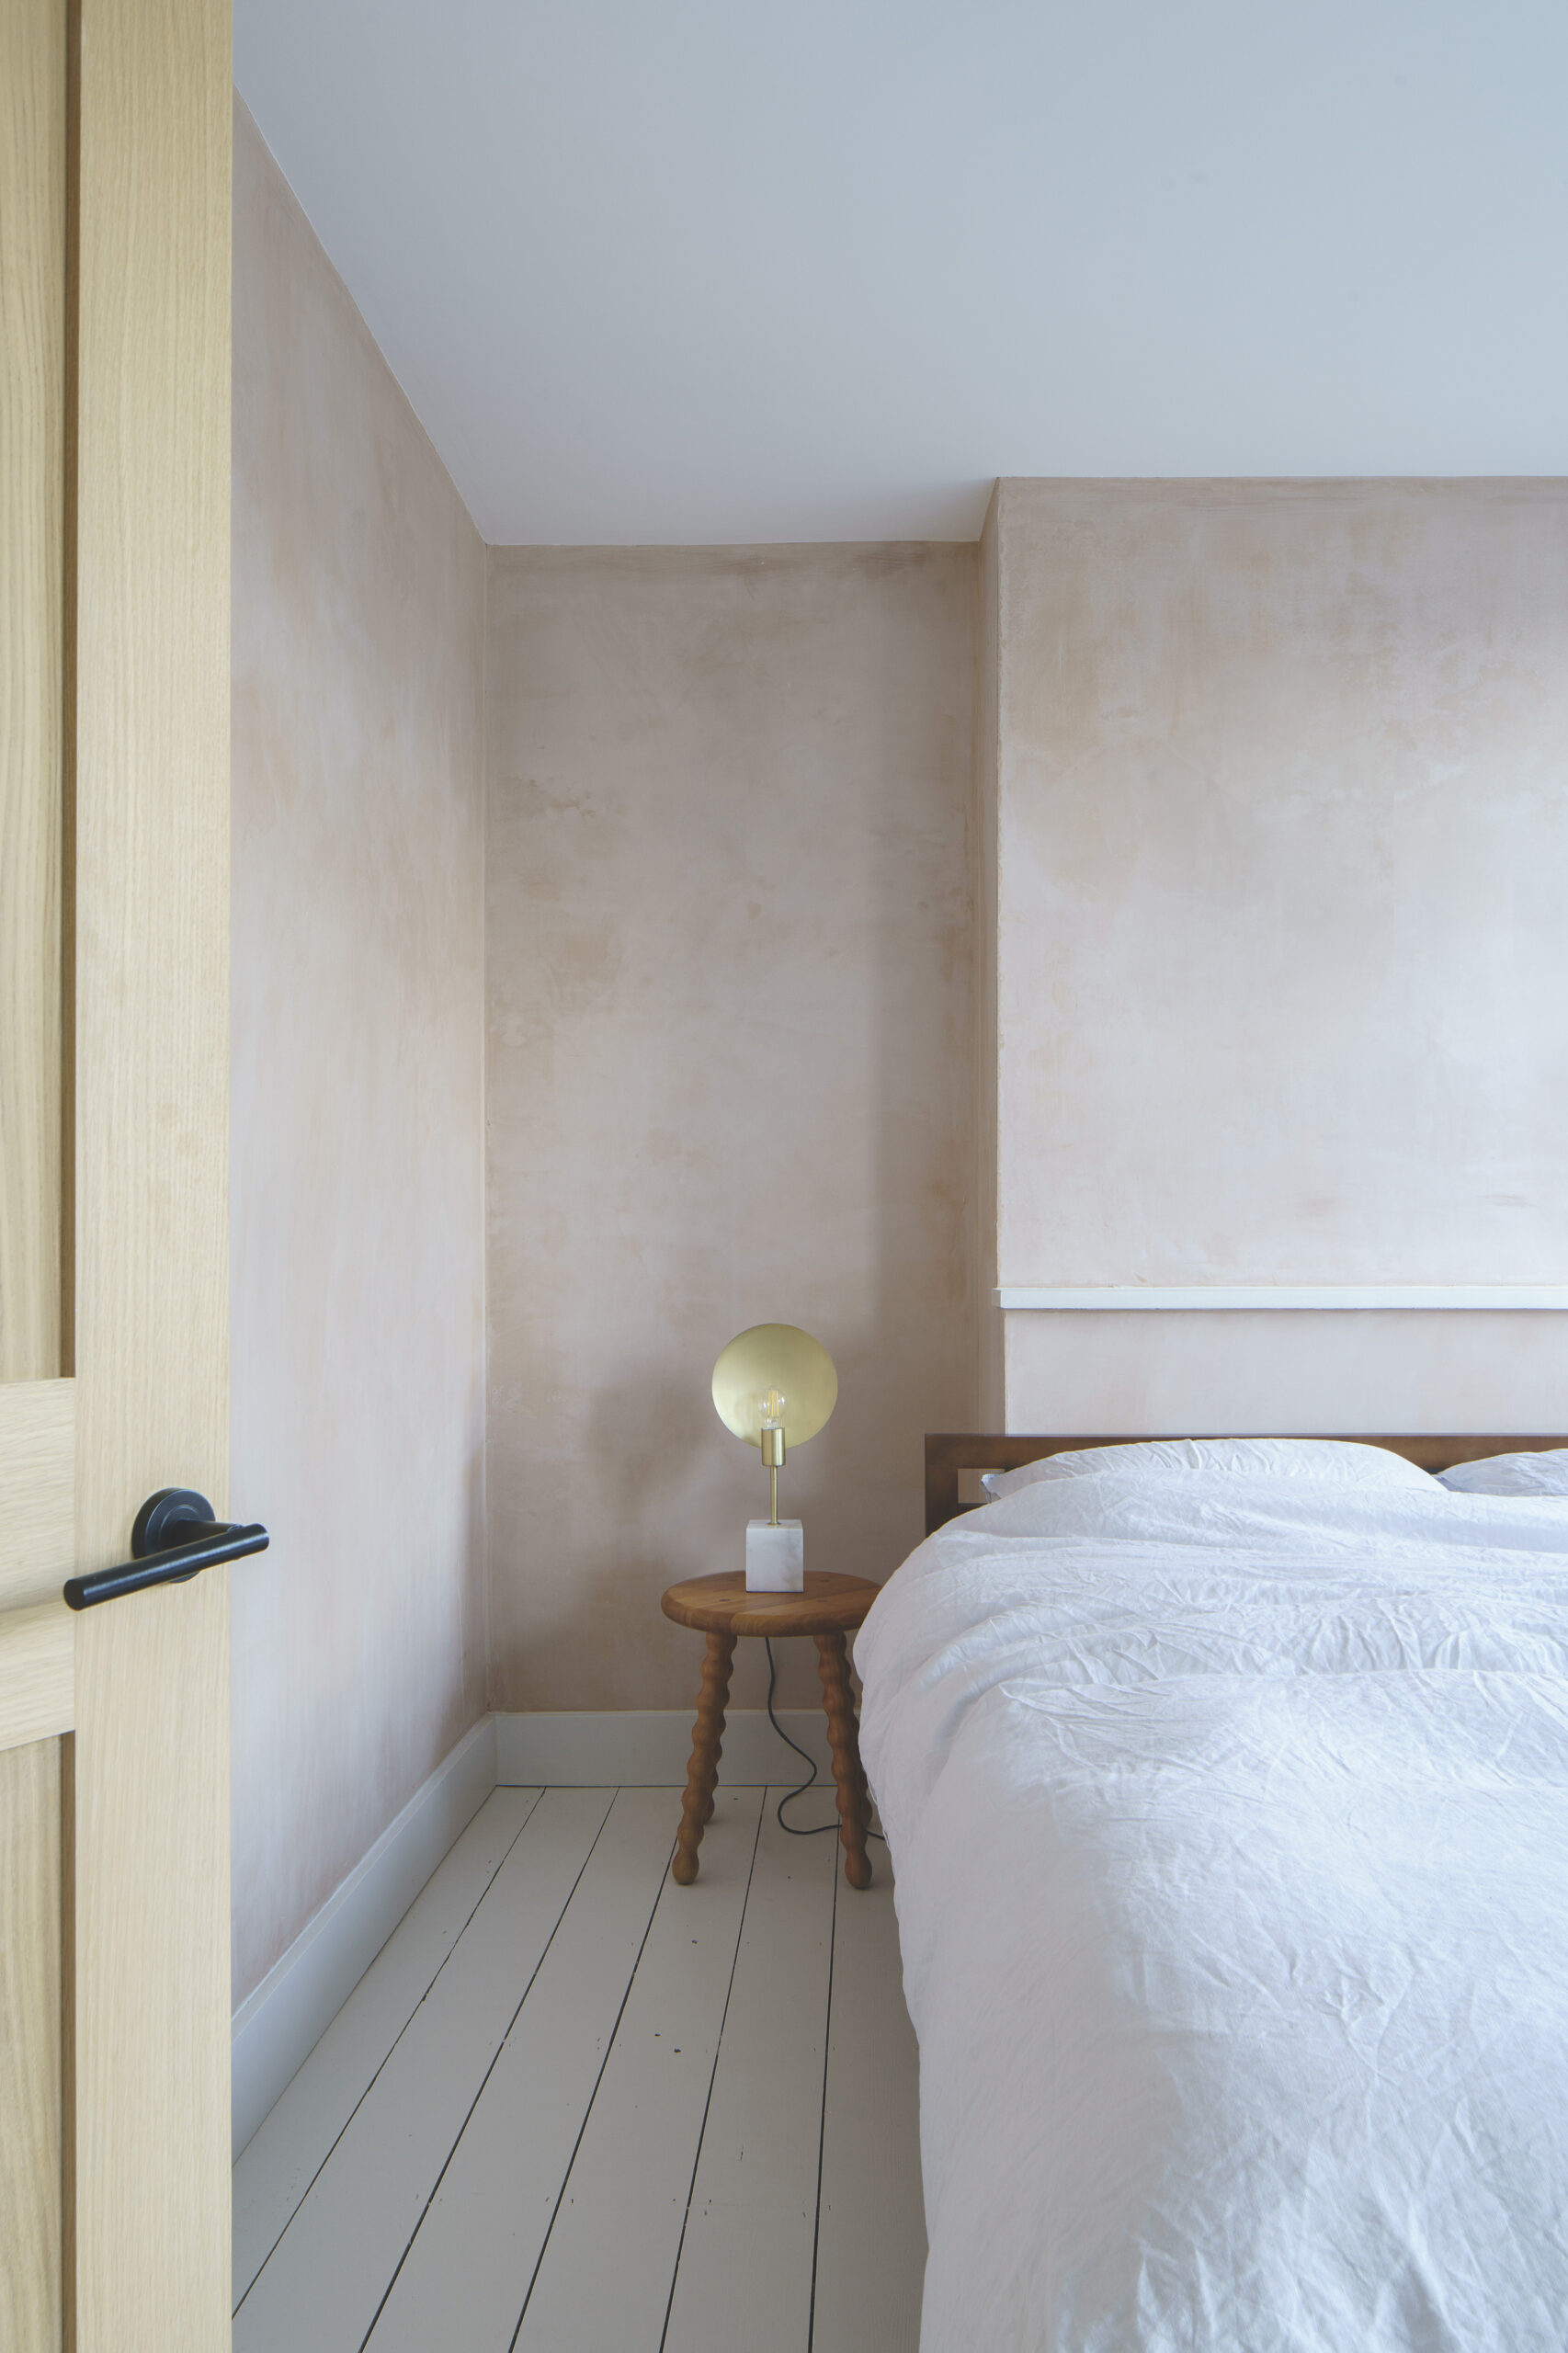 Evoke Projects Ltd - Peckham renovation image bedroom